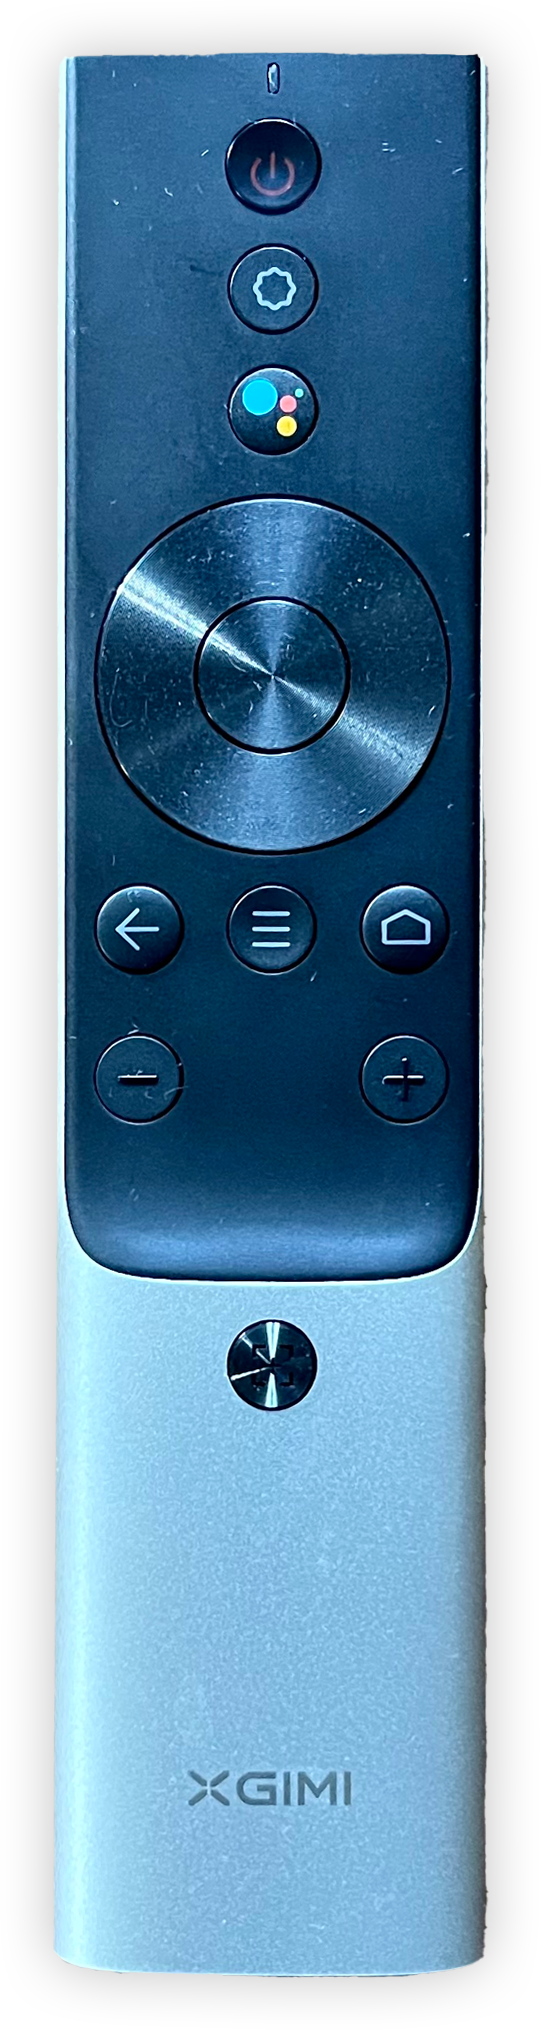 XGIMI Horizon Ultra remote control